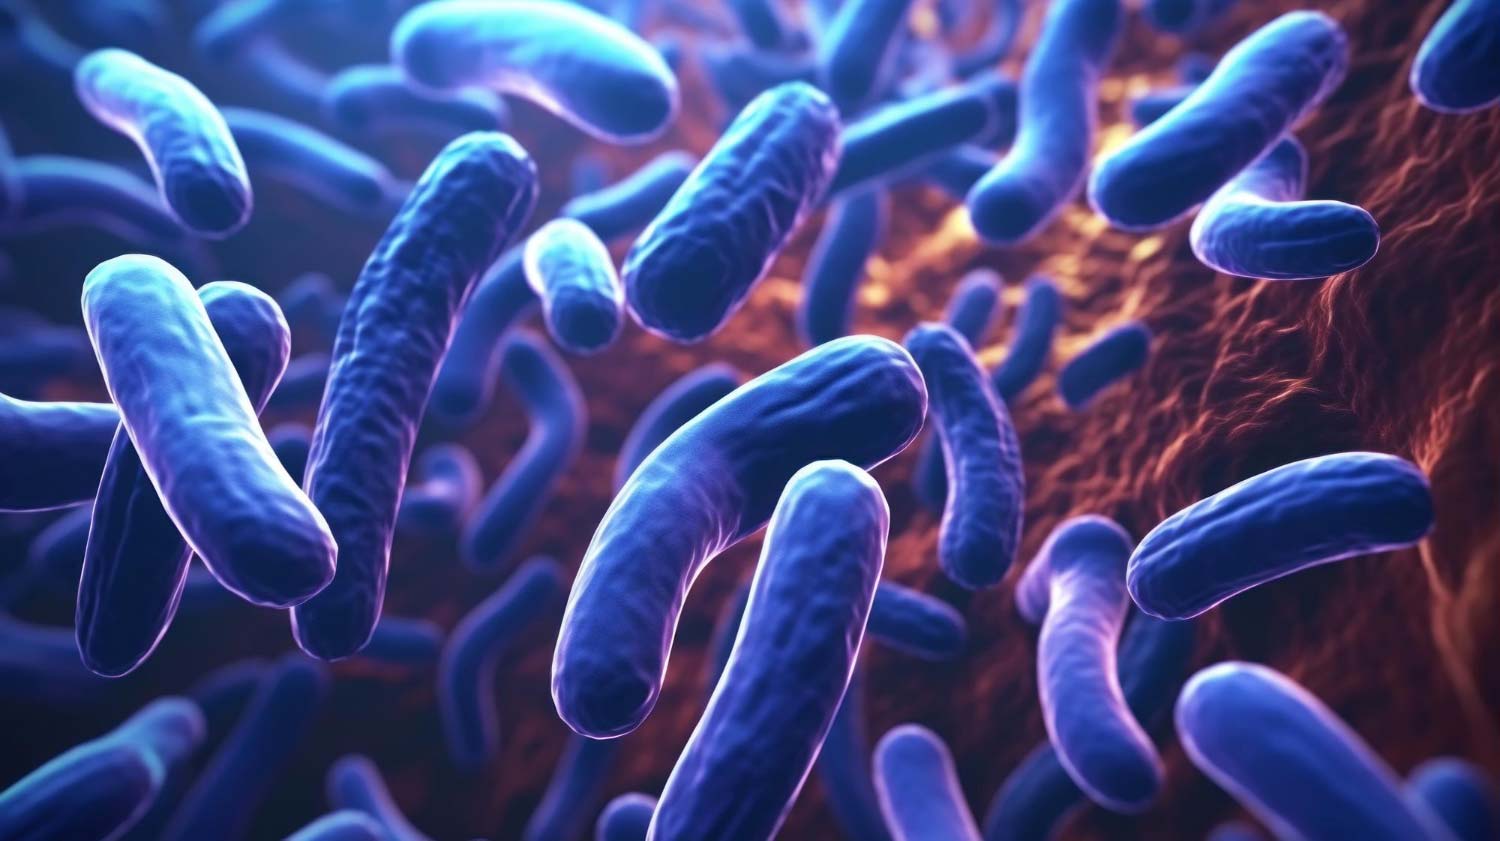 An ultrarealistic closeup scientific image of microbiota colonies